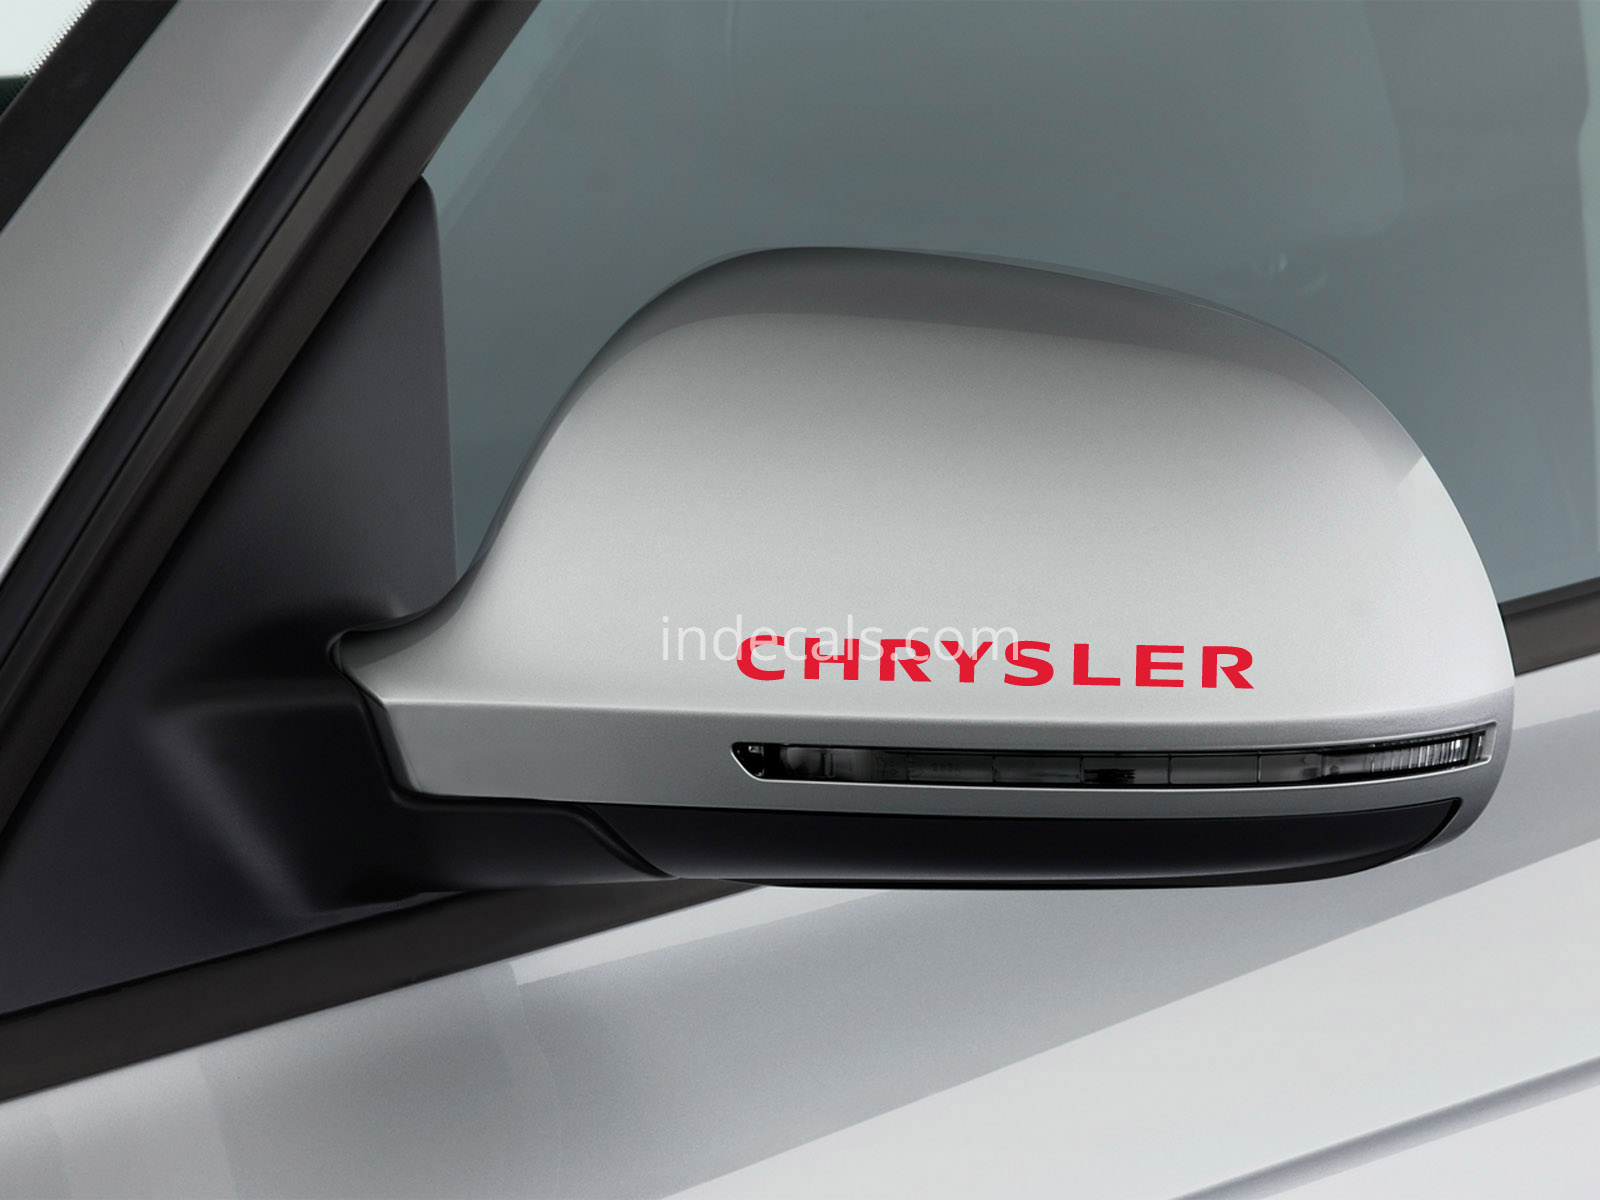 3 x Chrysler Stickers for Mirrors - White